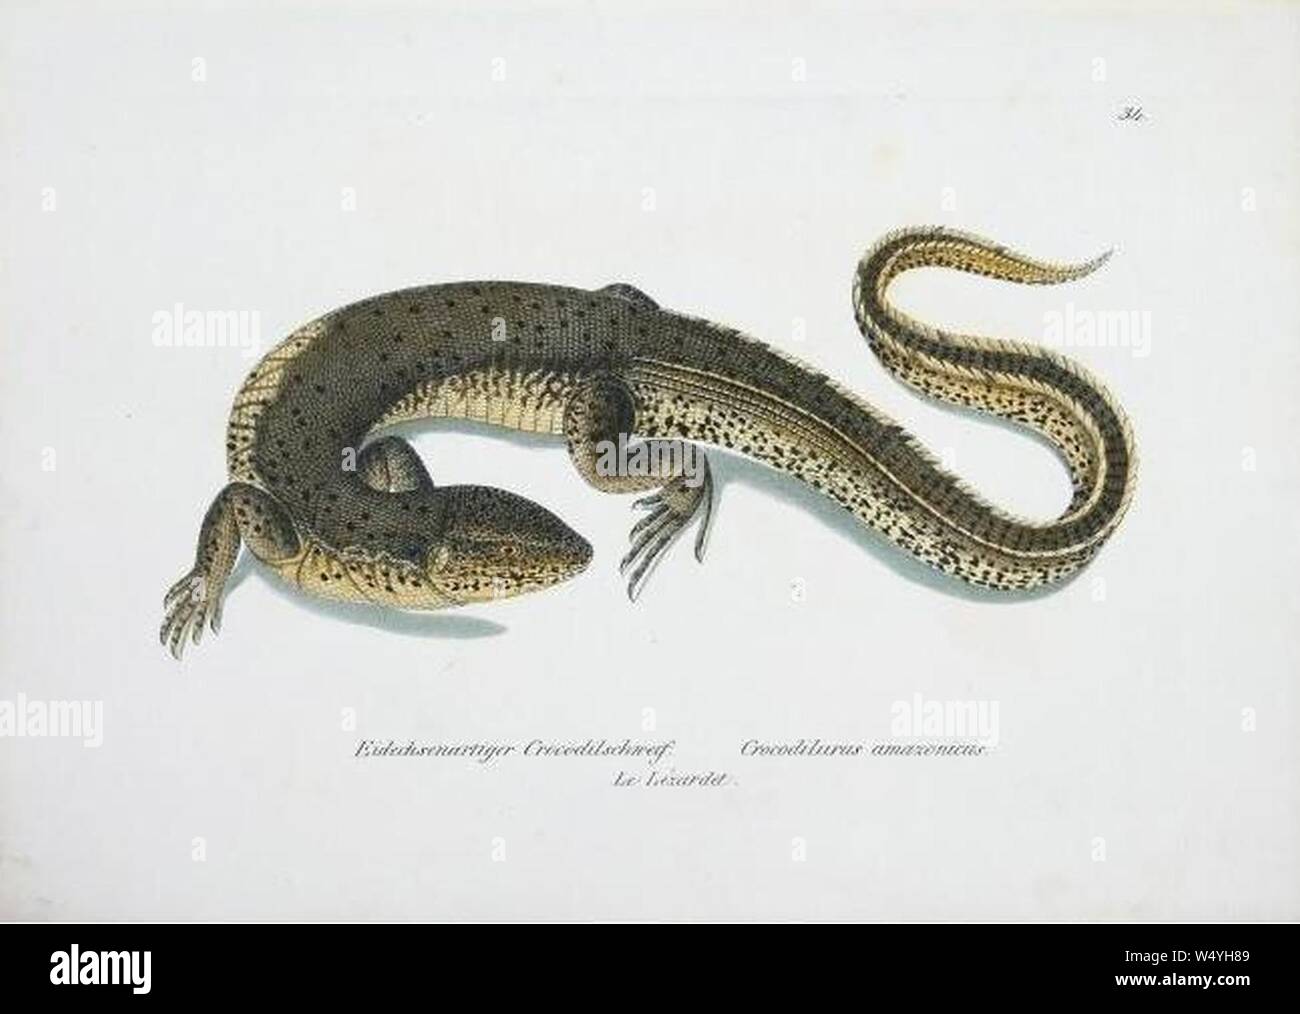 Crocodilurus amazonicus Schinz. Stockfoto